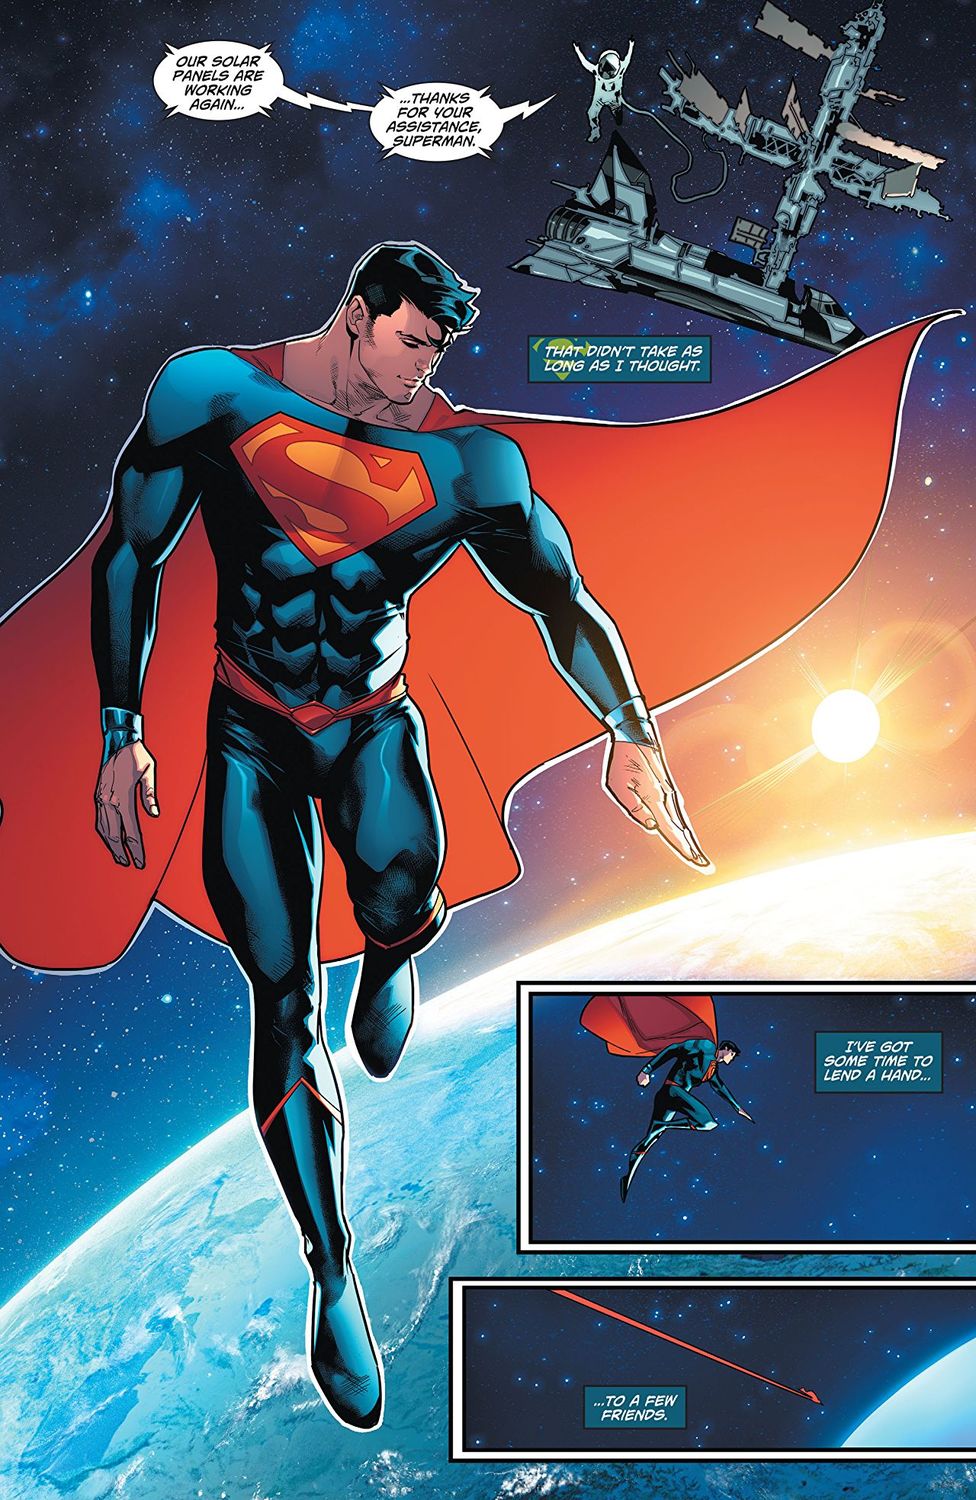 DC Universe Rebirth. Superman. Vol. 2: Trials of the Super Son TPB